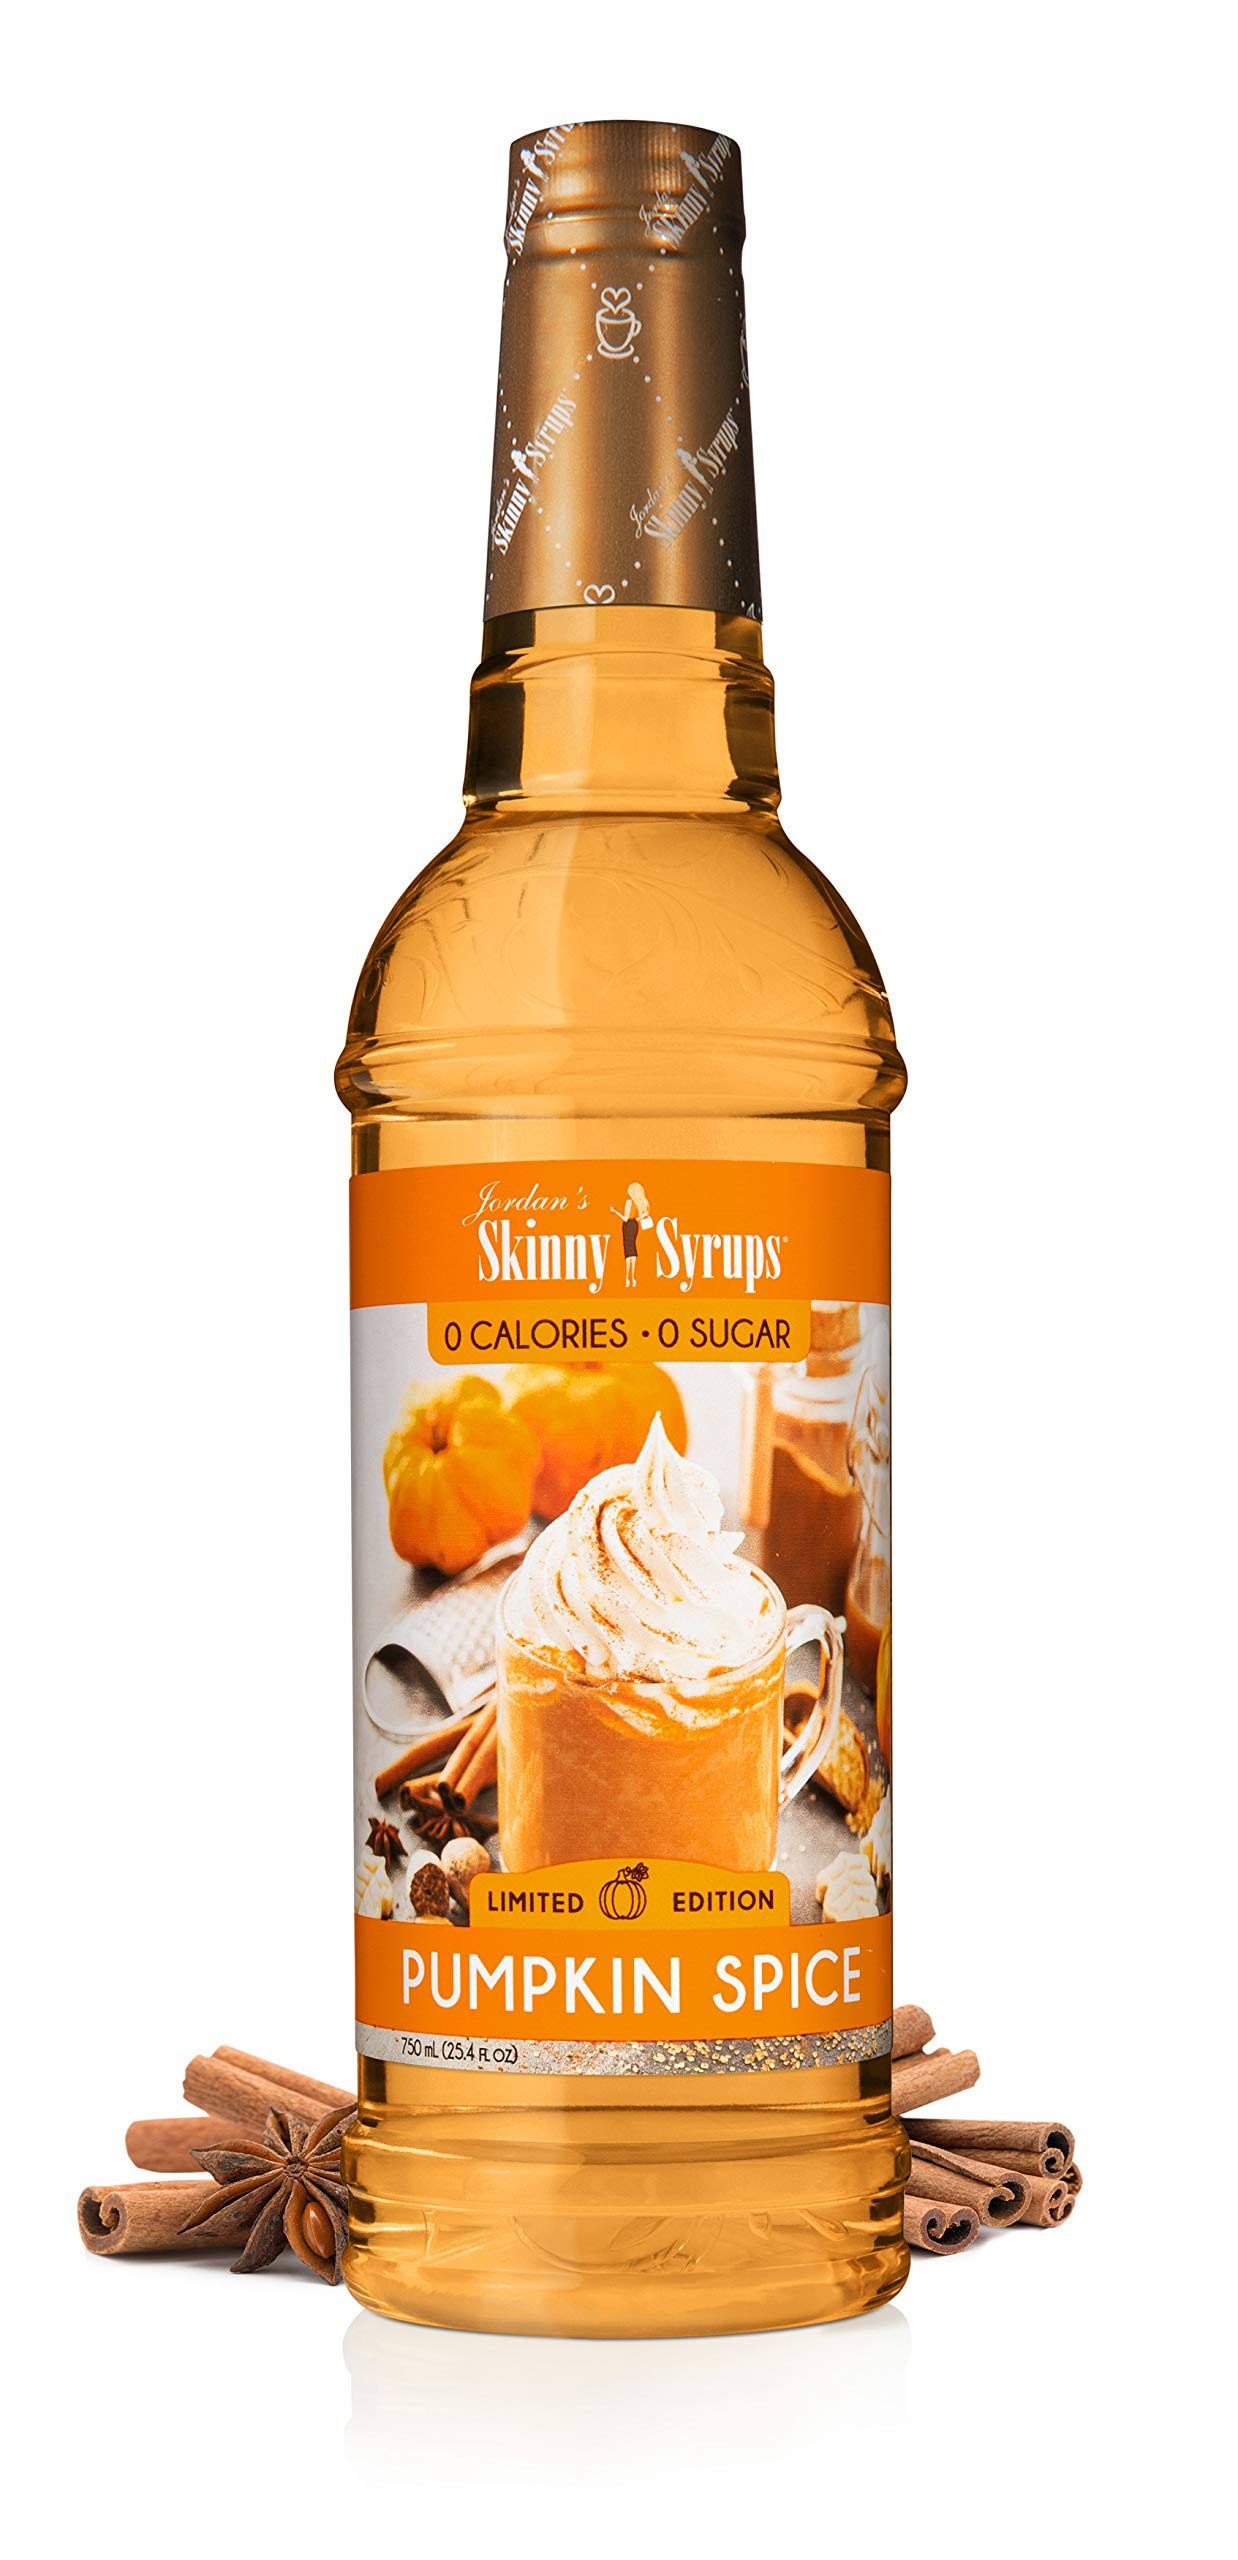 Jordan's Sugar Free Skinny Syrups - Pumpkin Spice, 25.4oz